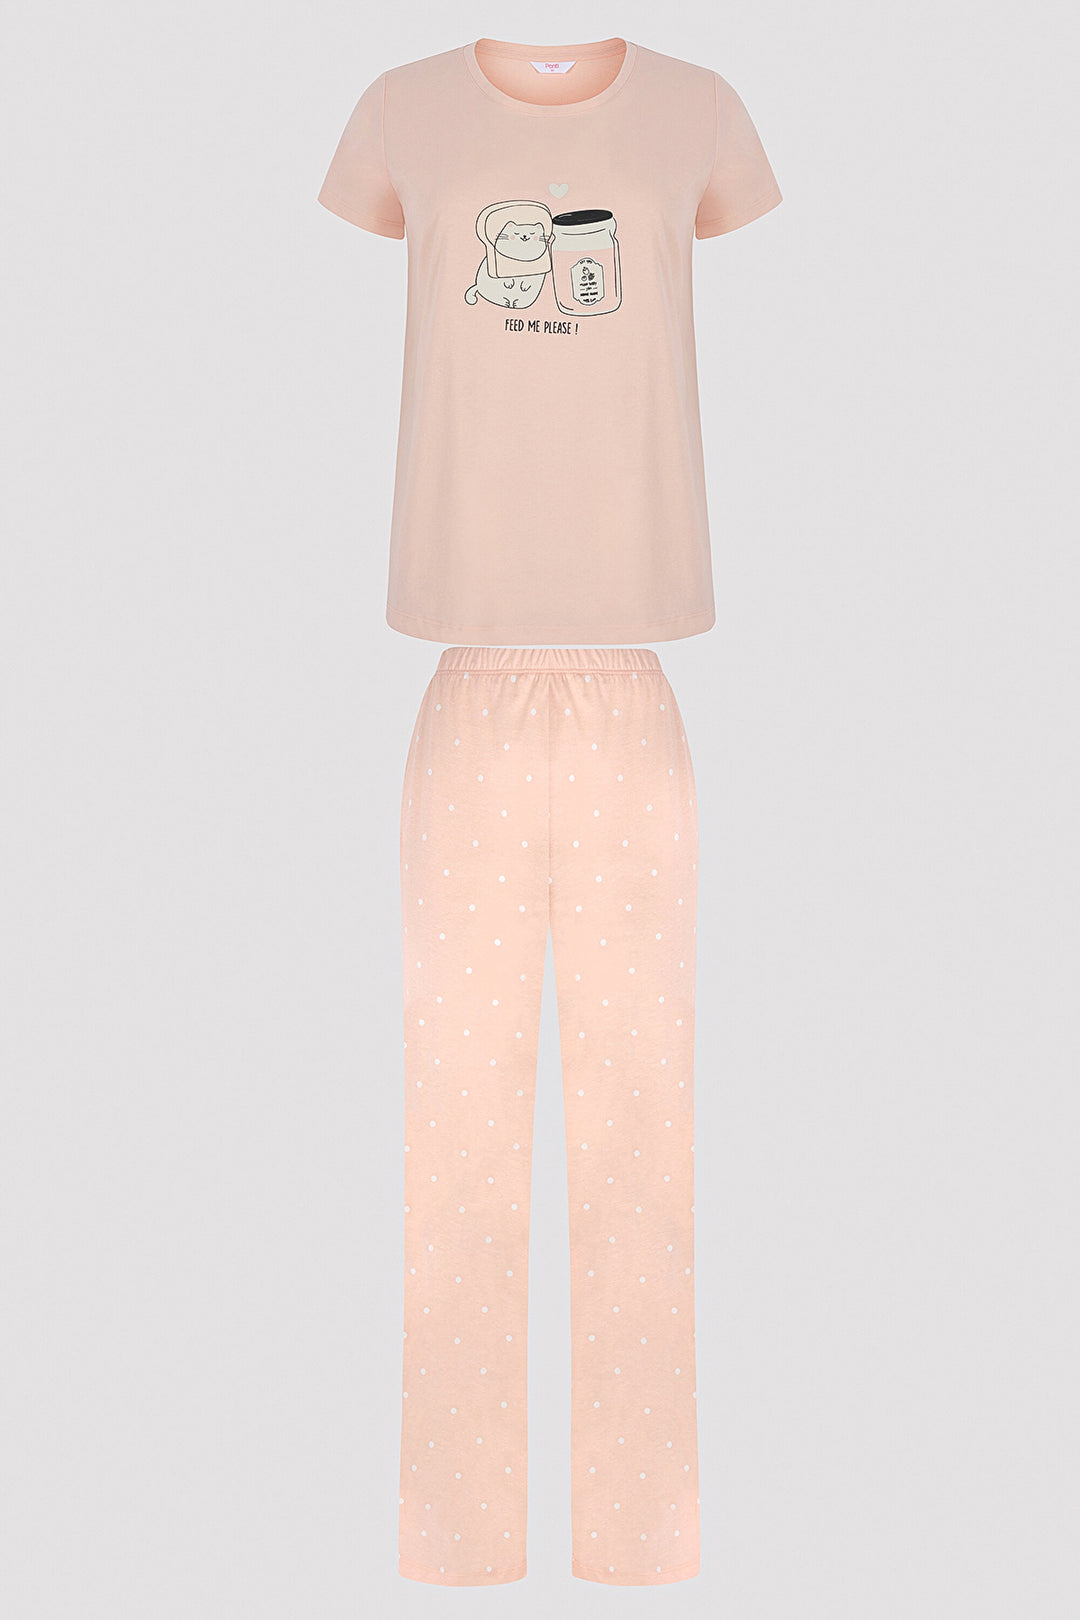 Happy Pink Pants Pajama Set